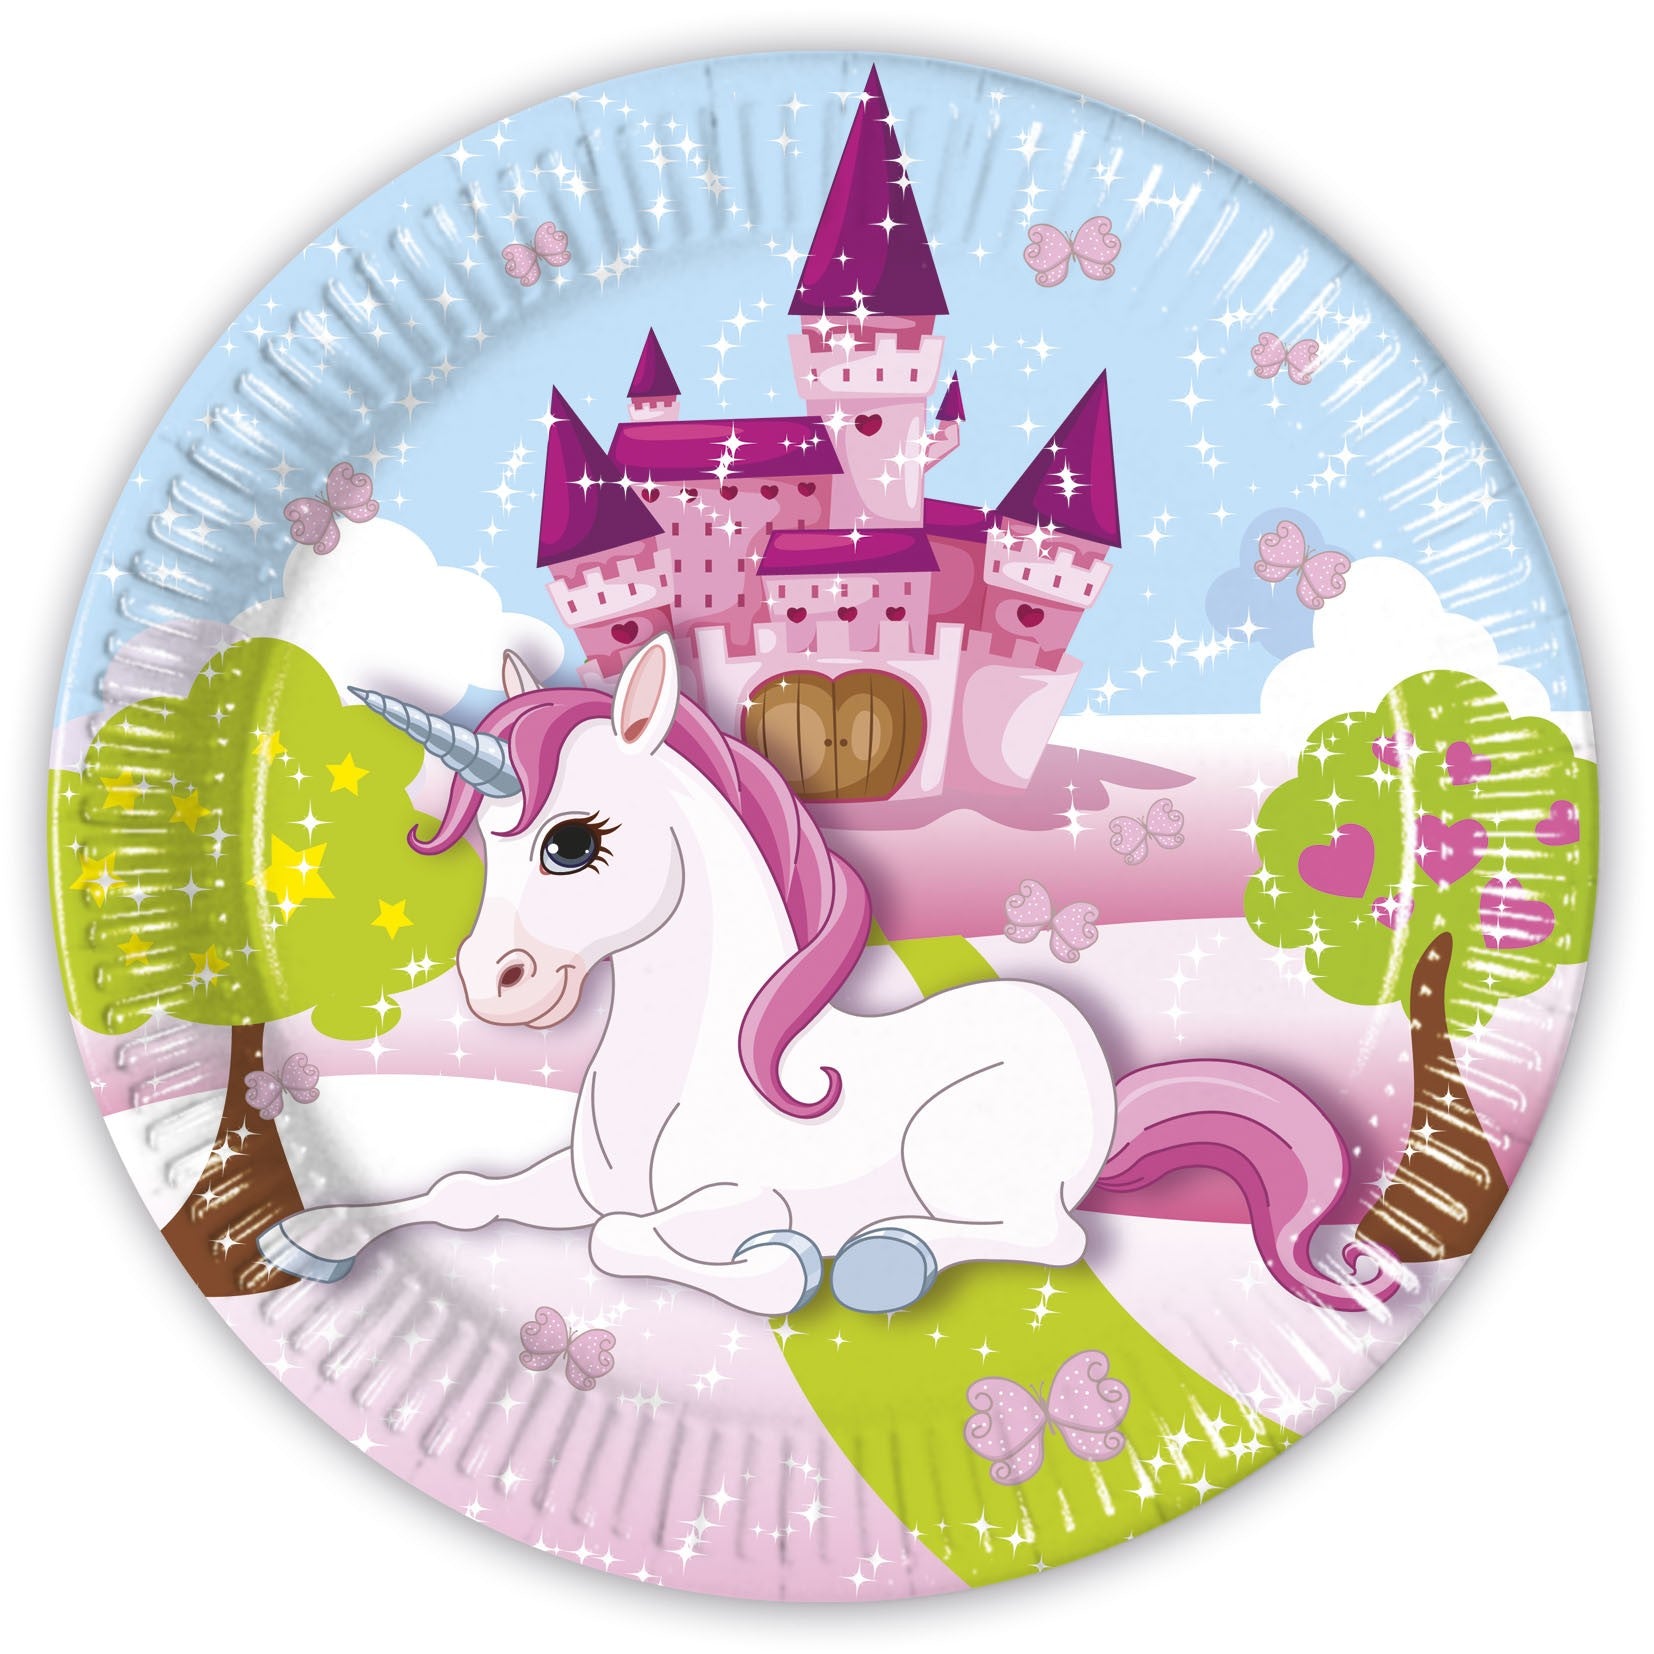 Princess Unicorn - Plates